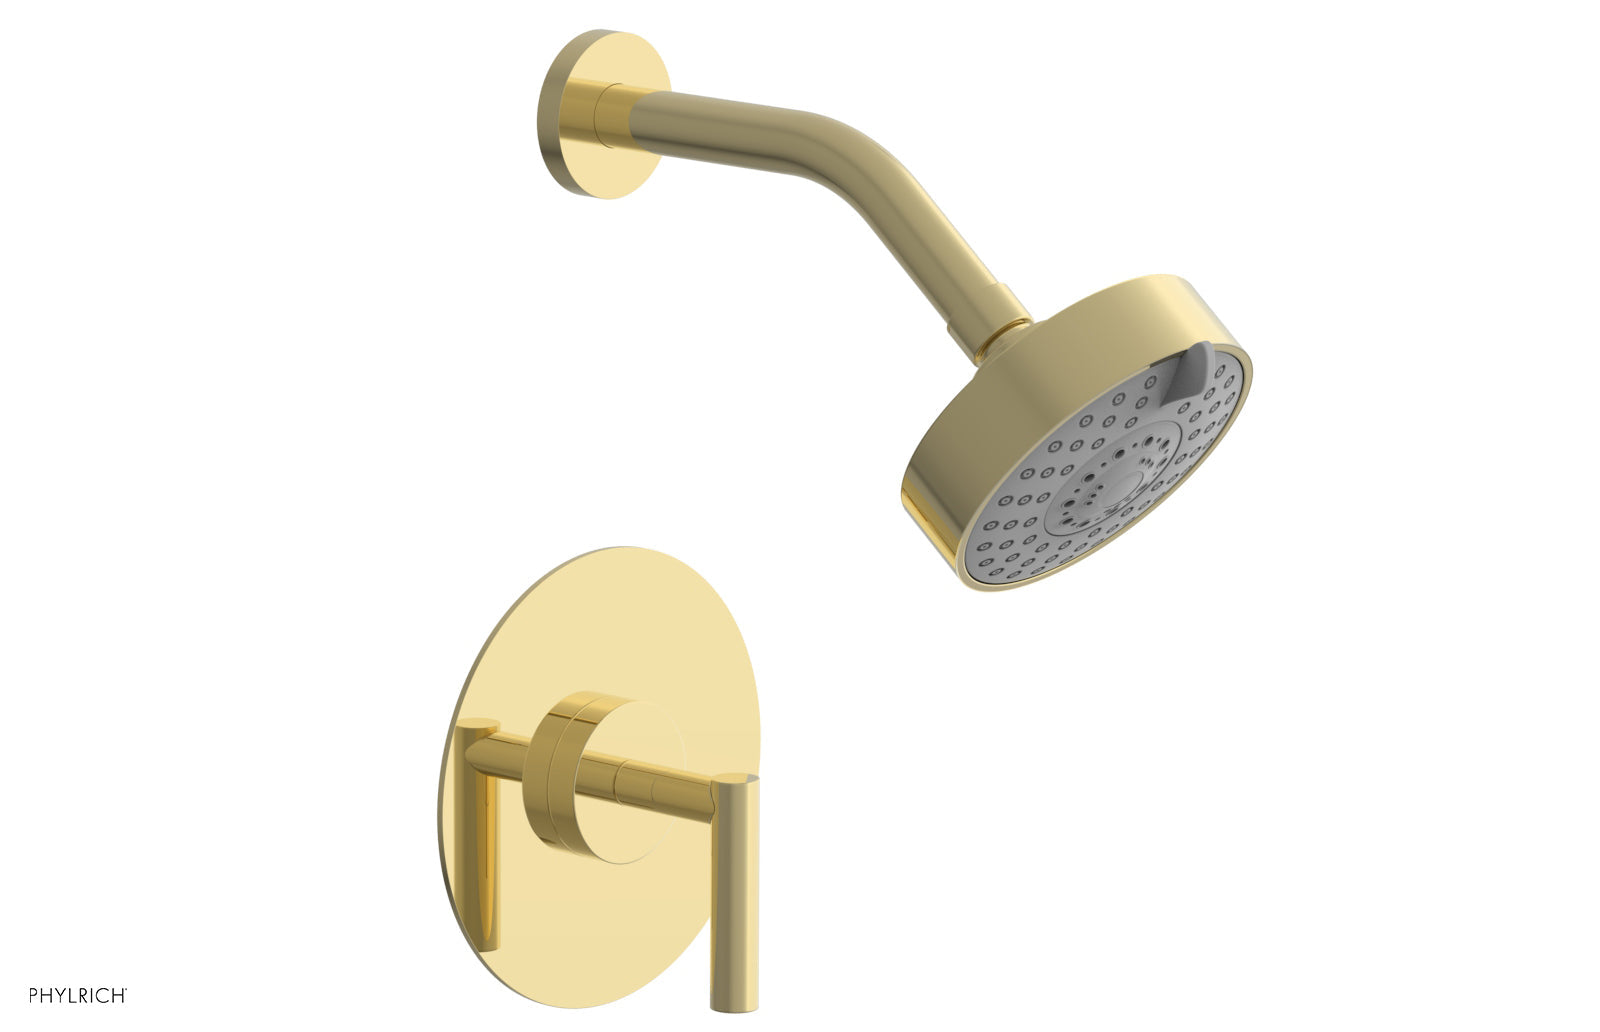 Shower bar and hand shower – the ideal shower set